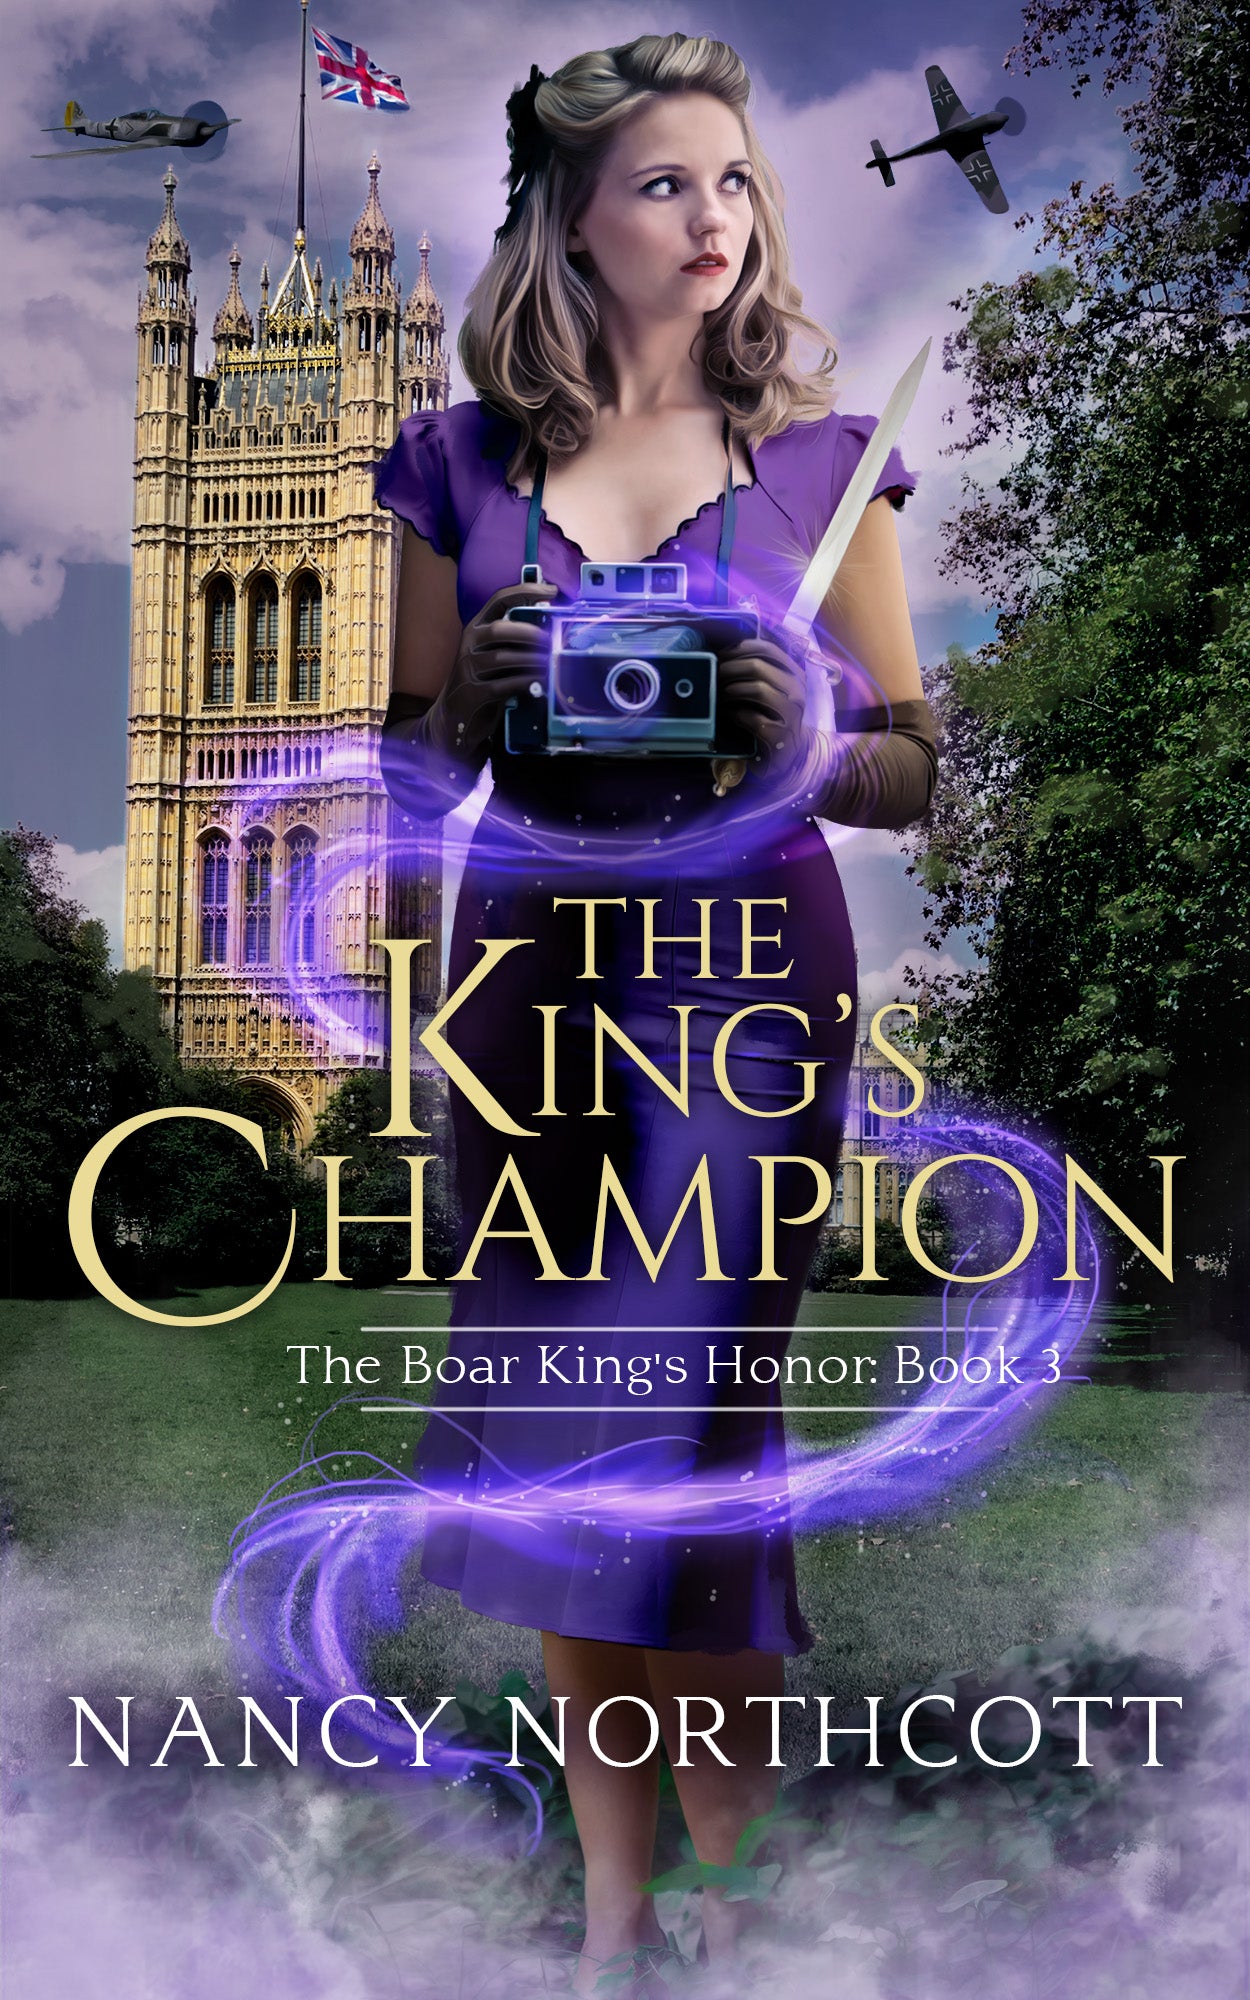 The Boar King's Honor Trilogy Paperback Bundle